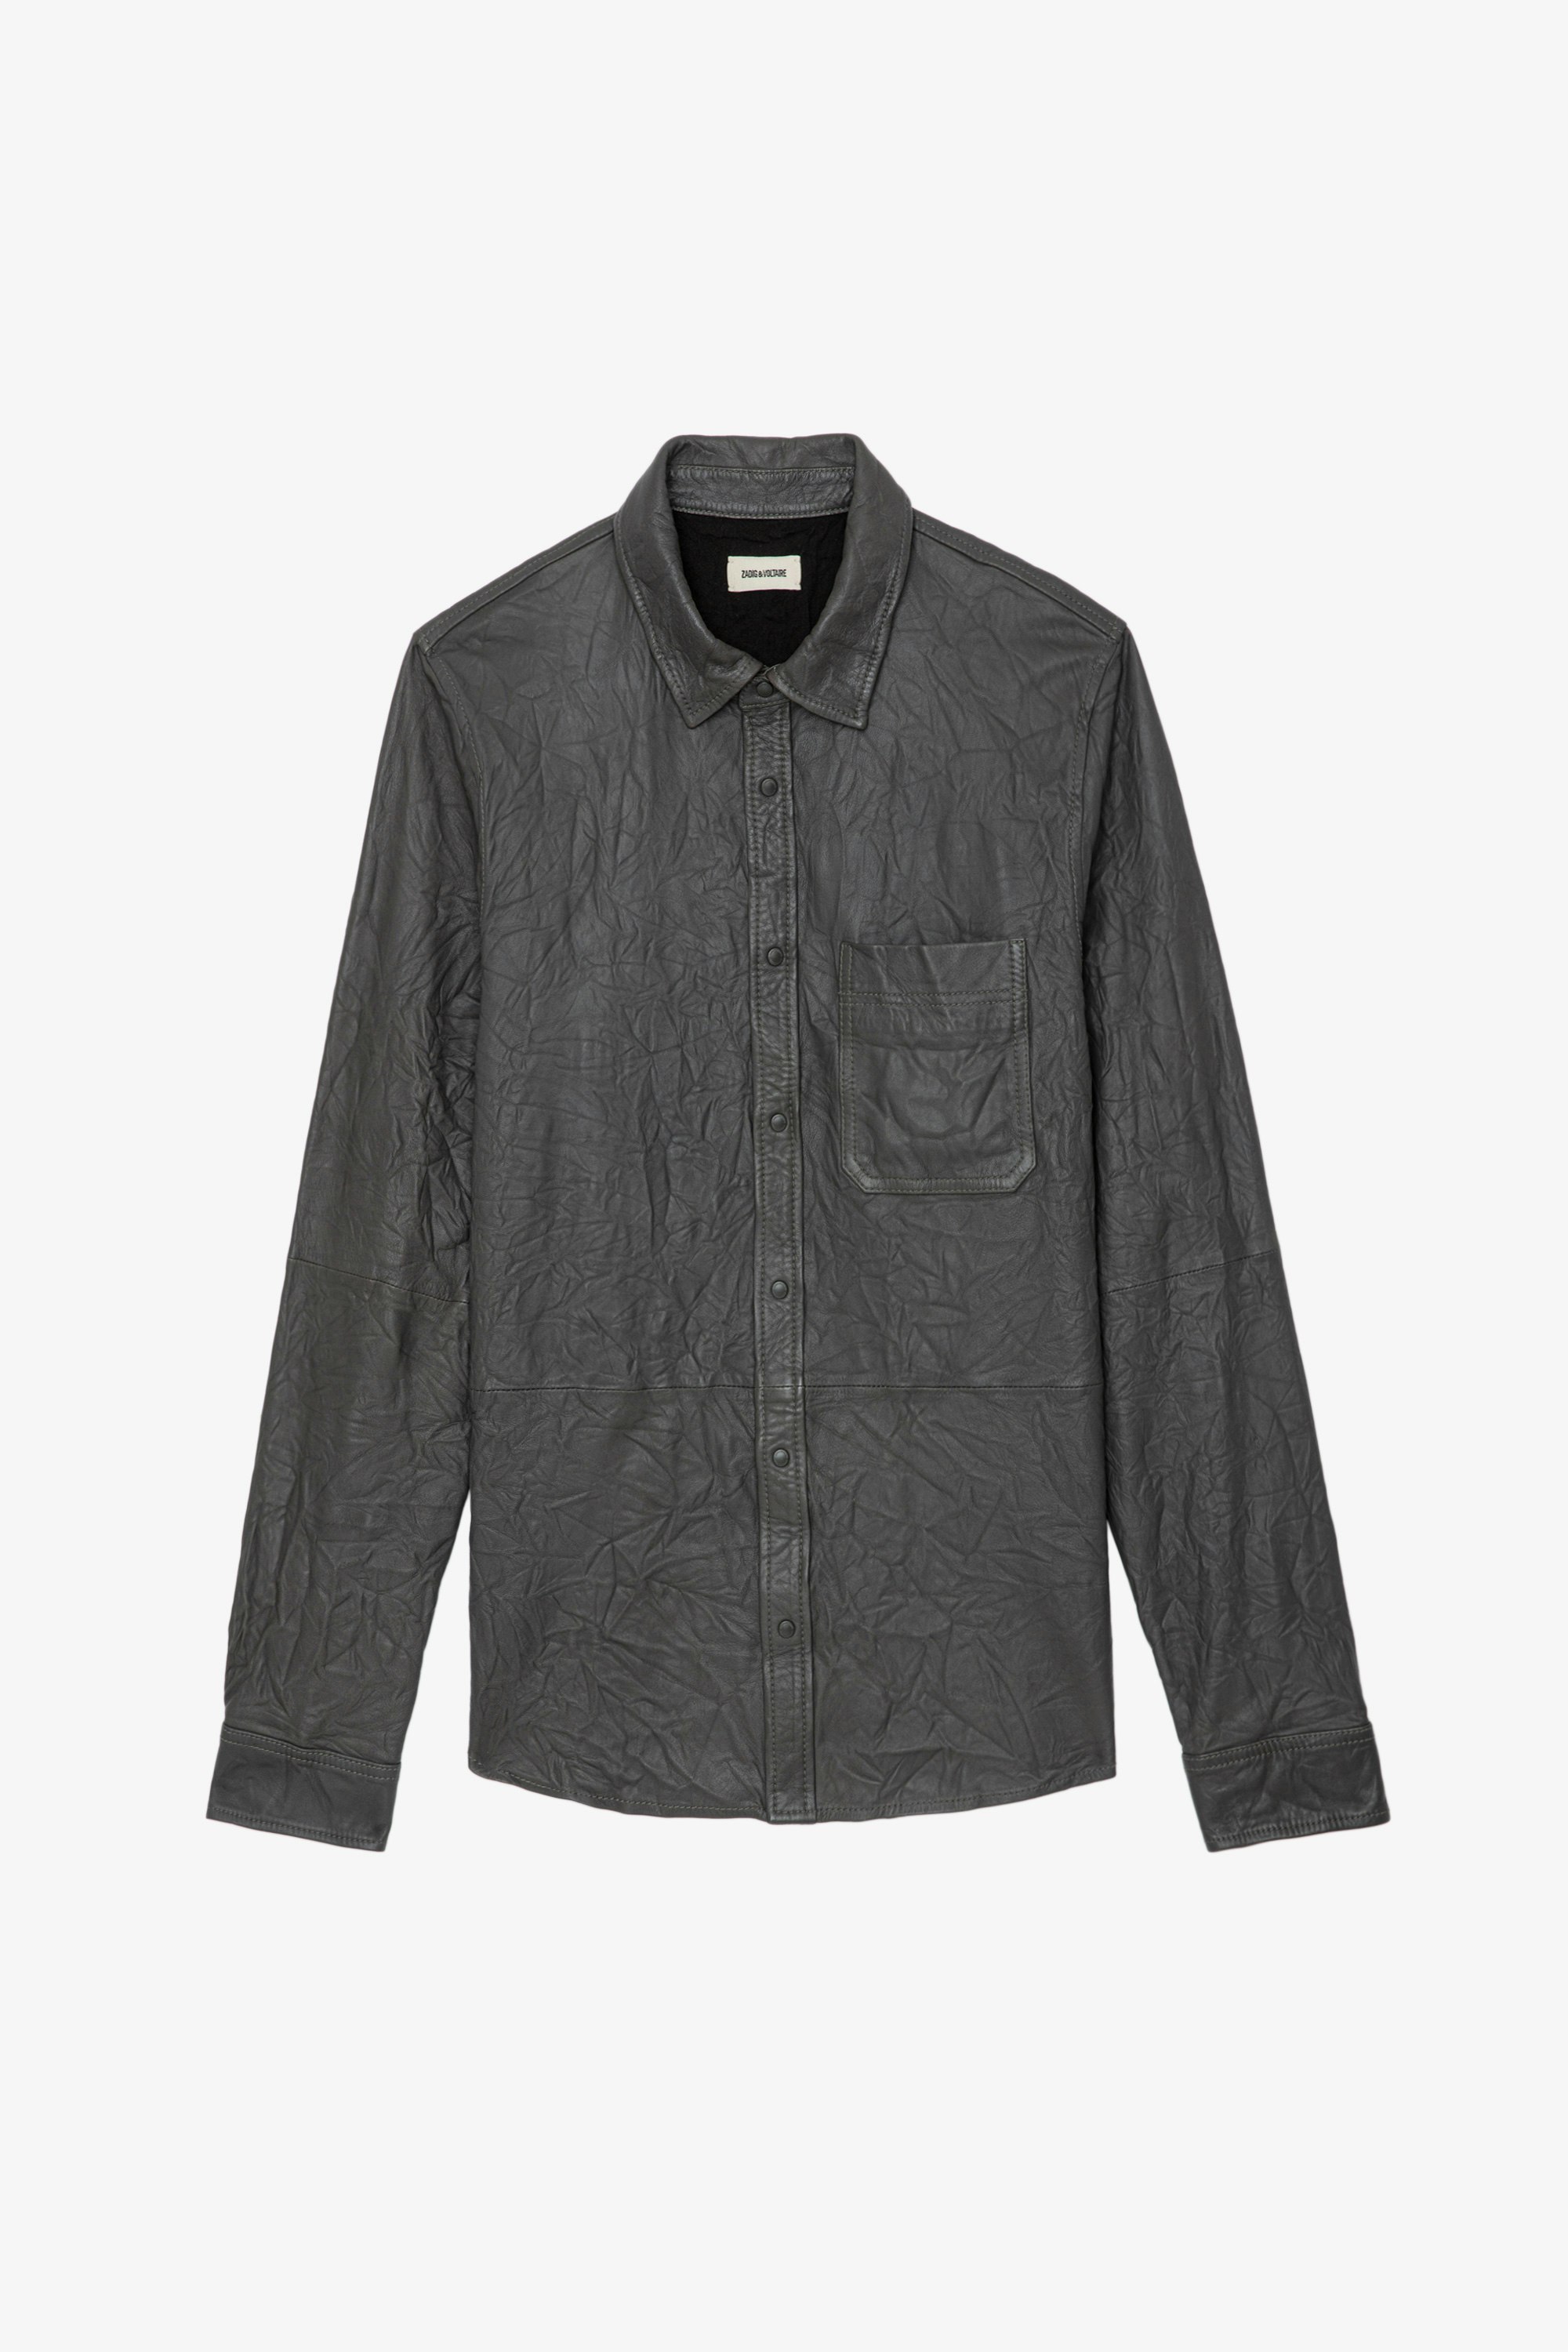 Serge Crinkled Leather Shirt - Men's crinkled leather shirt.